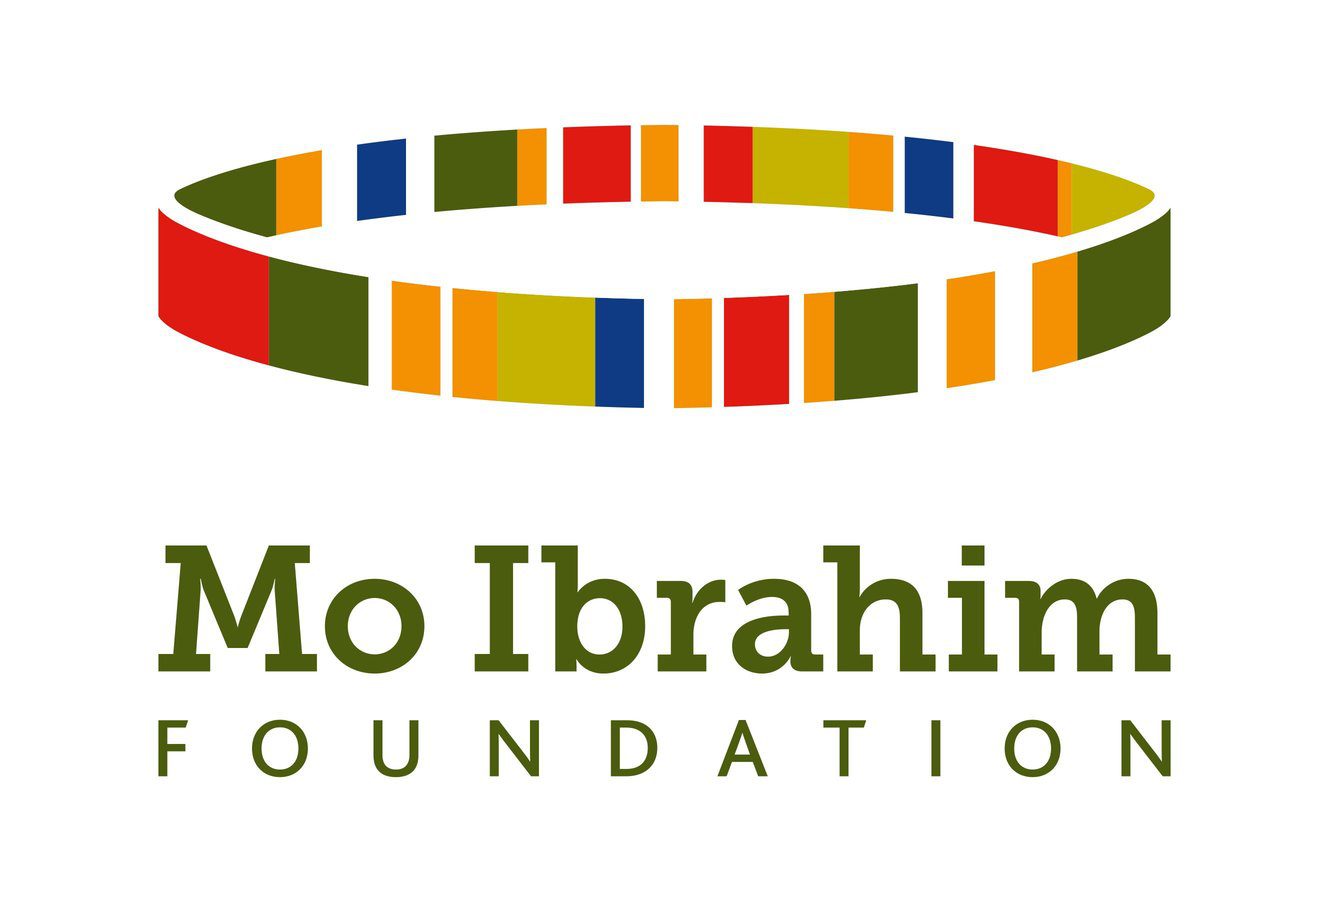 Mo Ibrahim Foundation